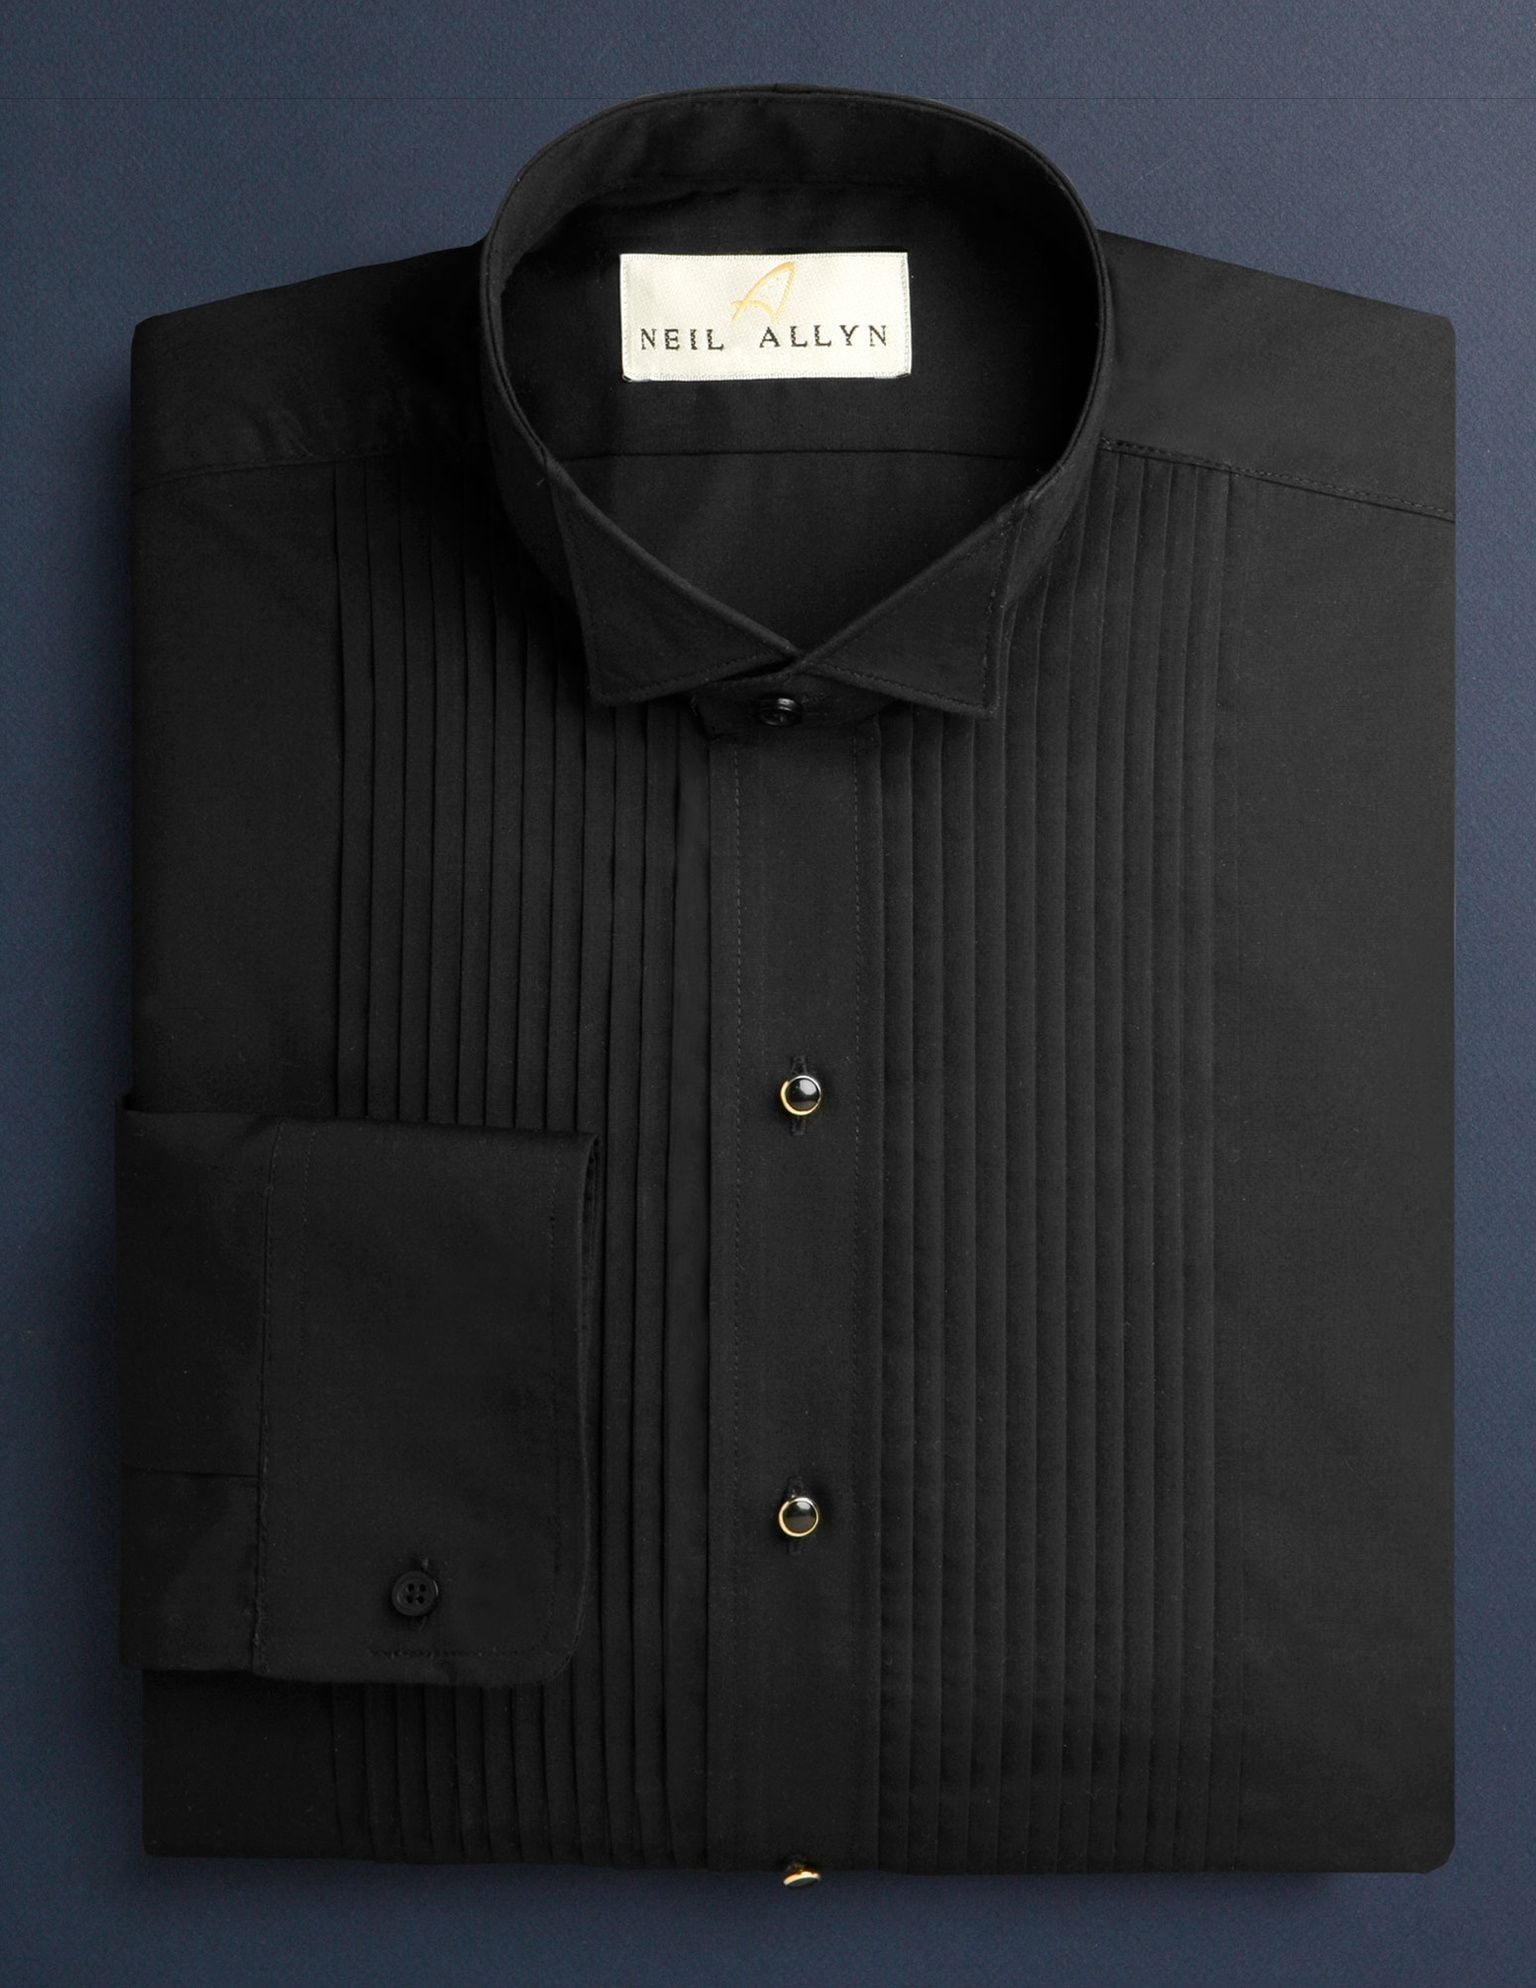 Neil Allyn Tuxedo Wedding Wing Tip Shirt sz M 32/33 BRAND NEW